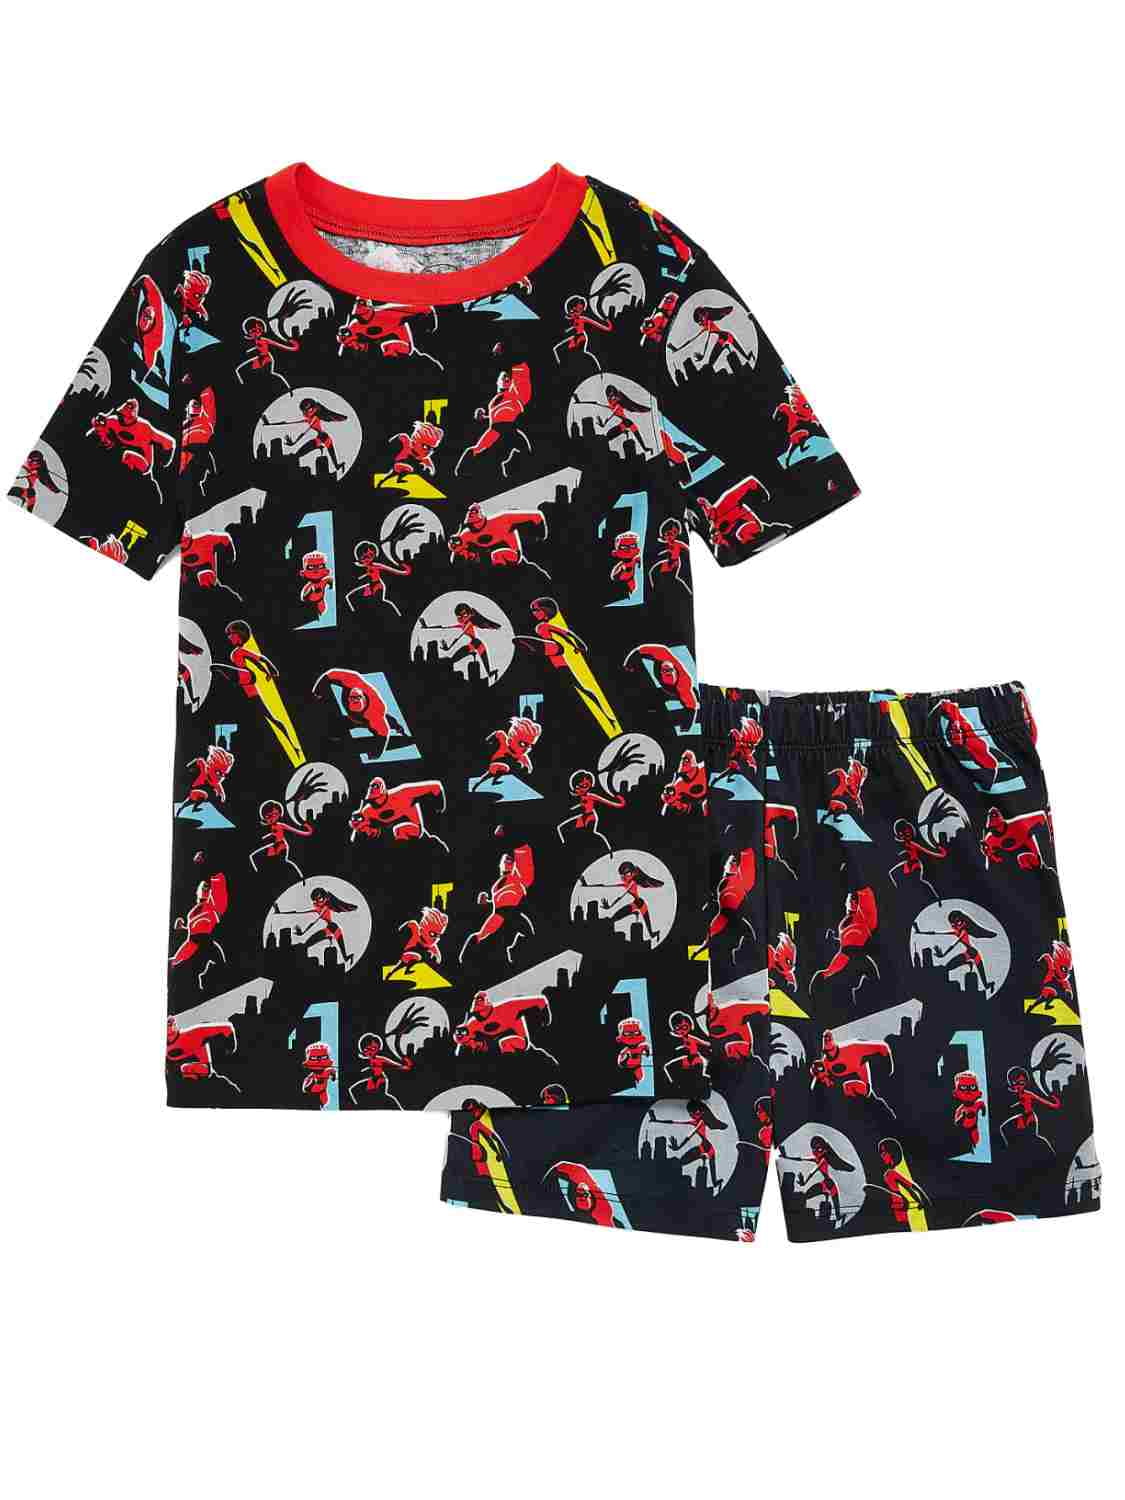 Incredibles 2 Toddler Boys Dash 2pc Pajama Pant Set Size 2T 3T 4T $36 